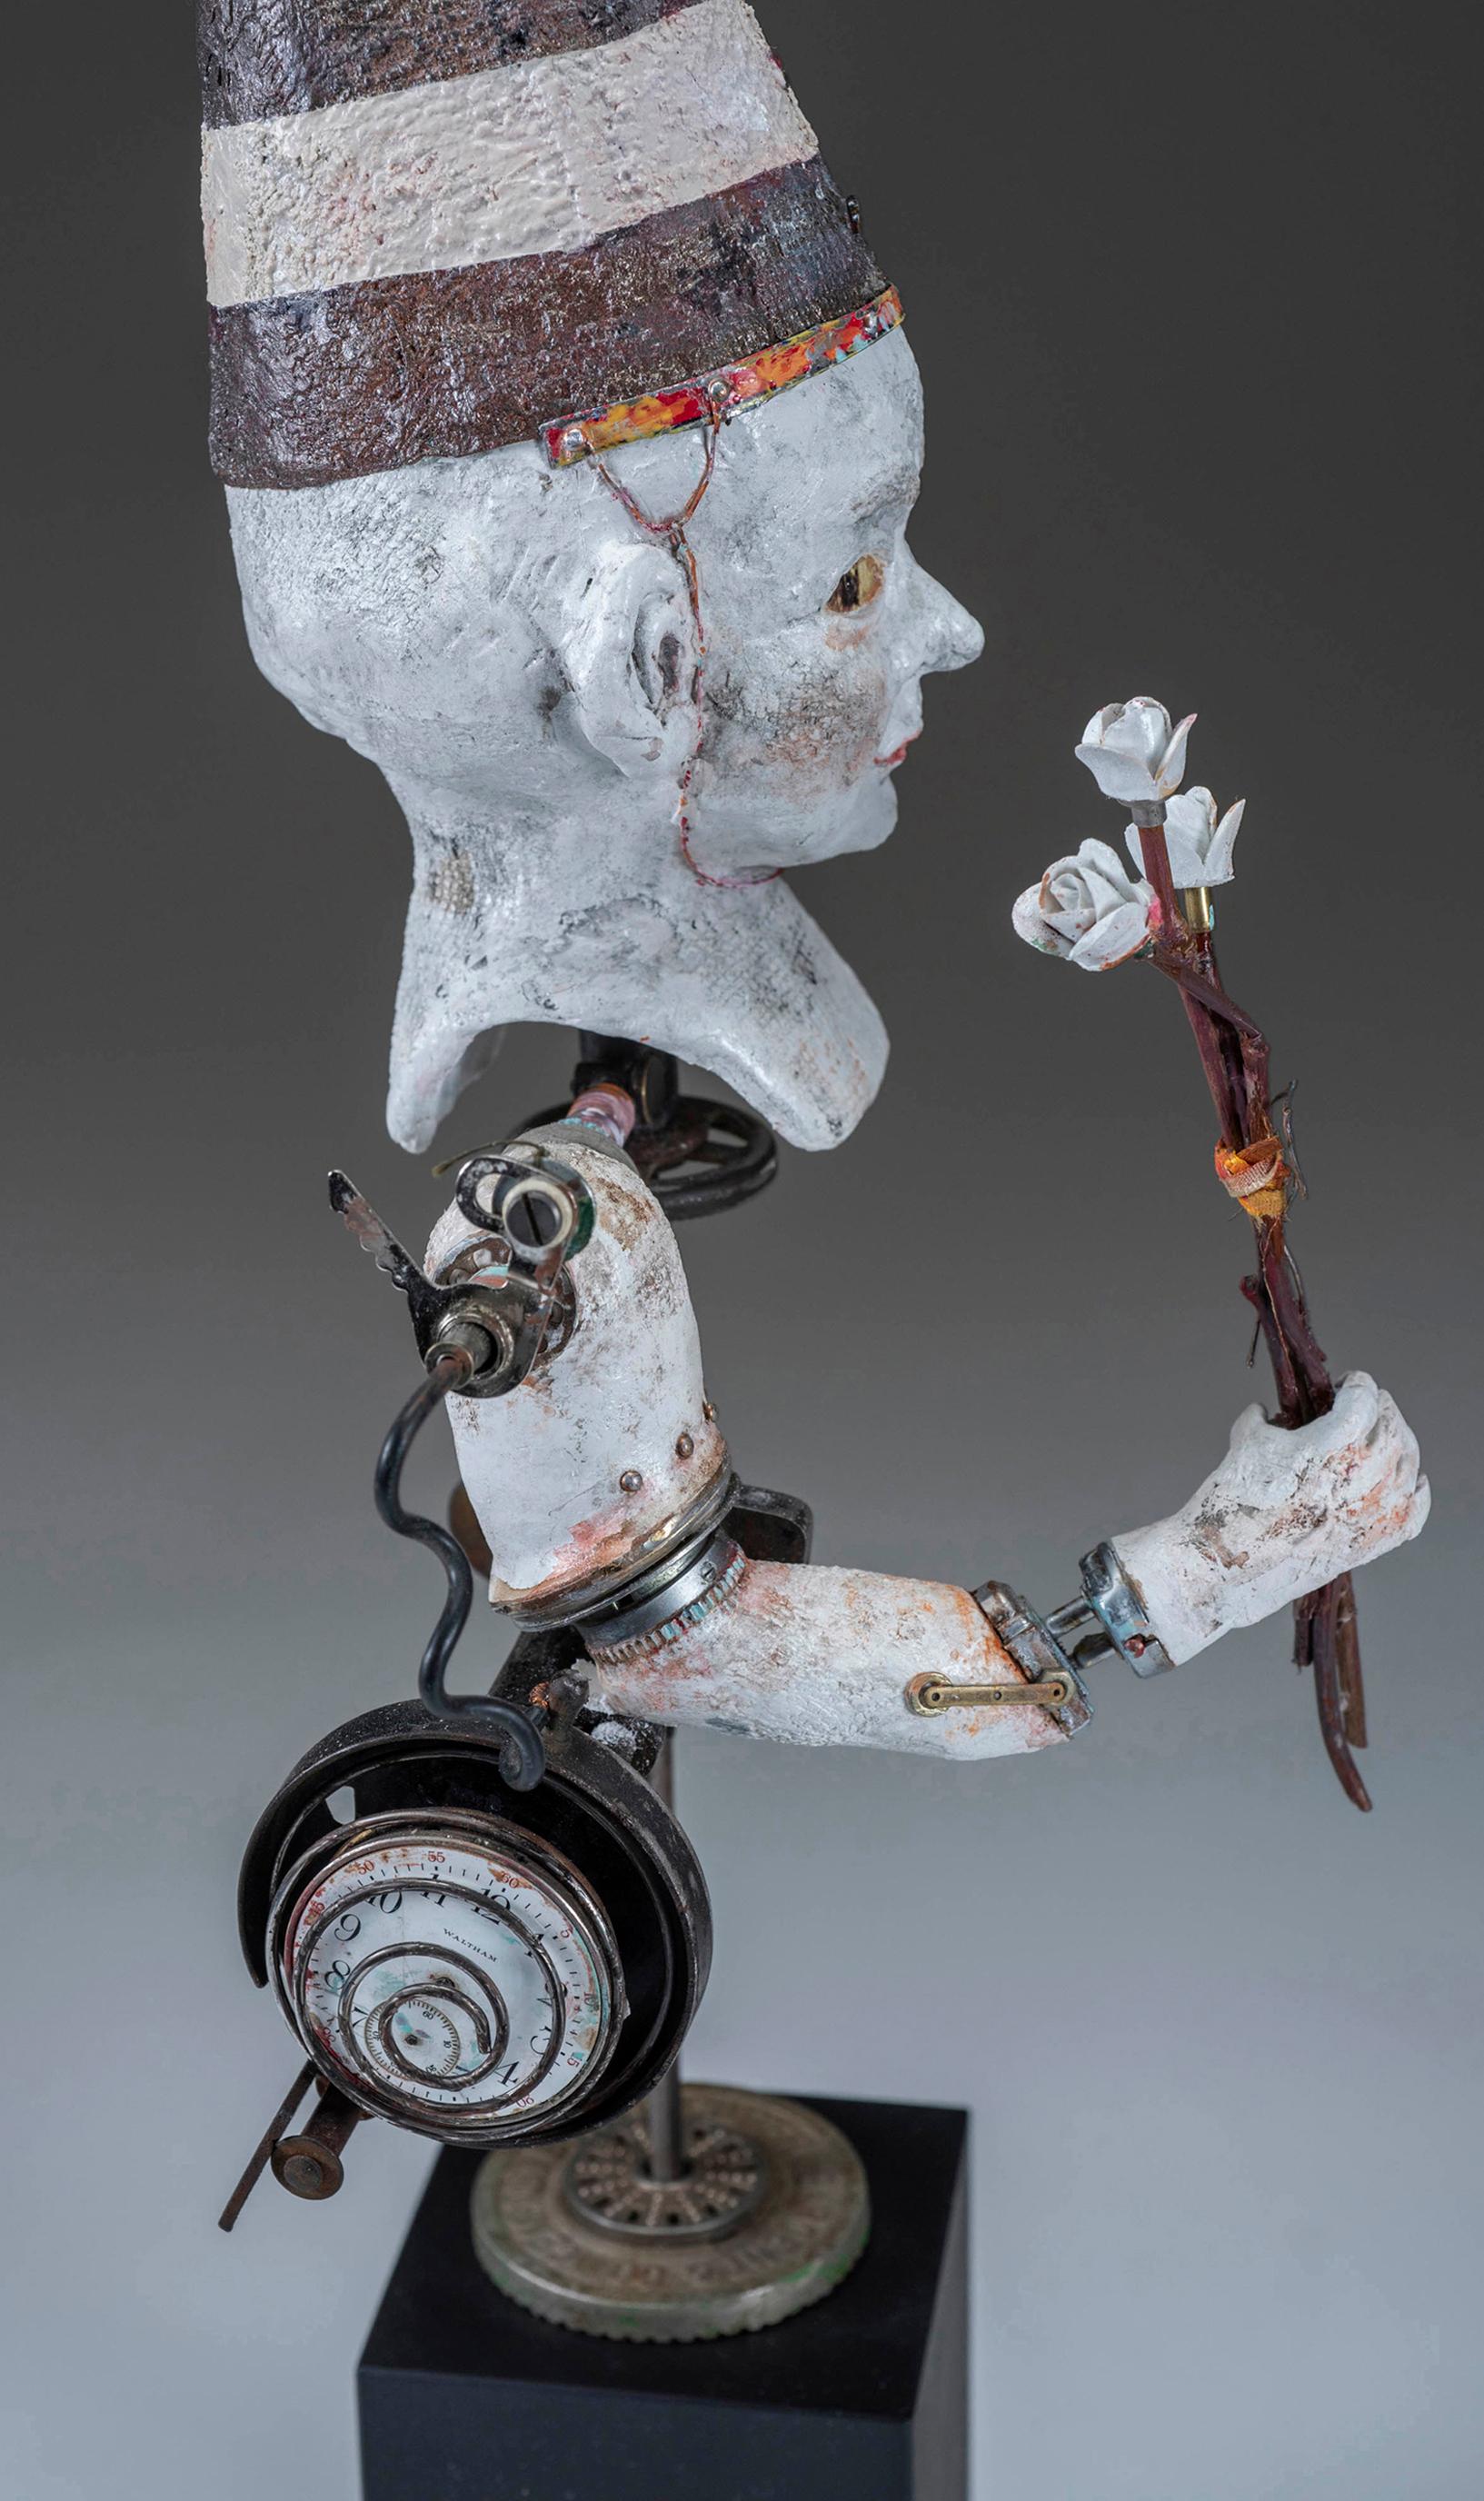 Surreal Sculpture: 'White Rose' - Surrealist Mixed Media Art by David Barnett